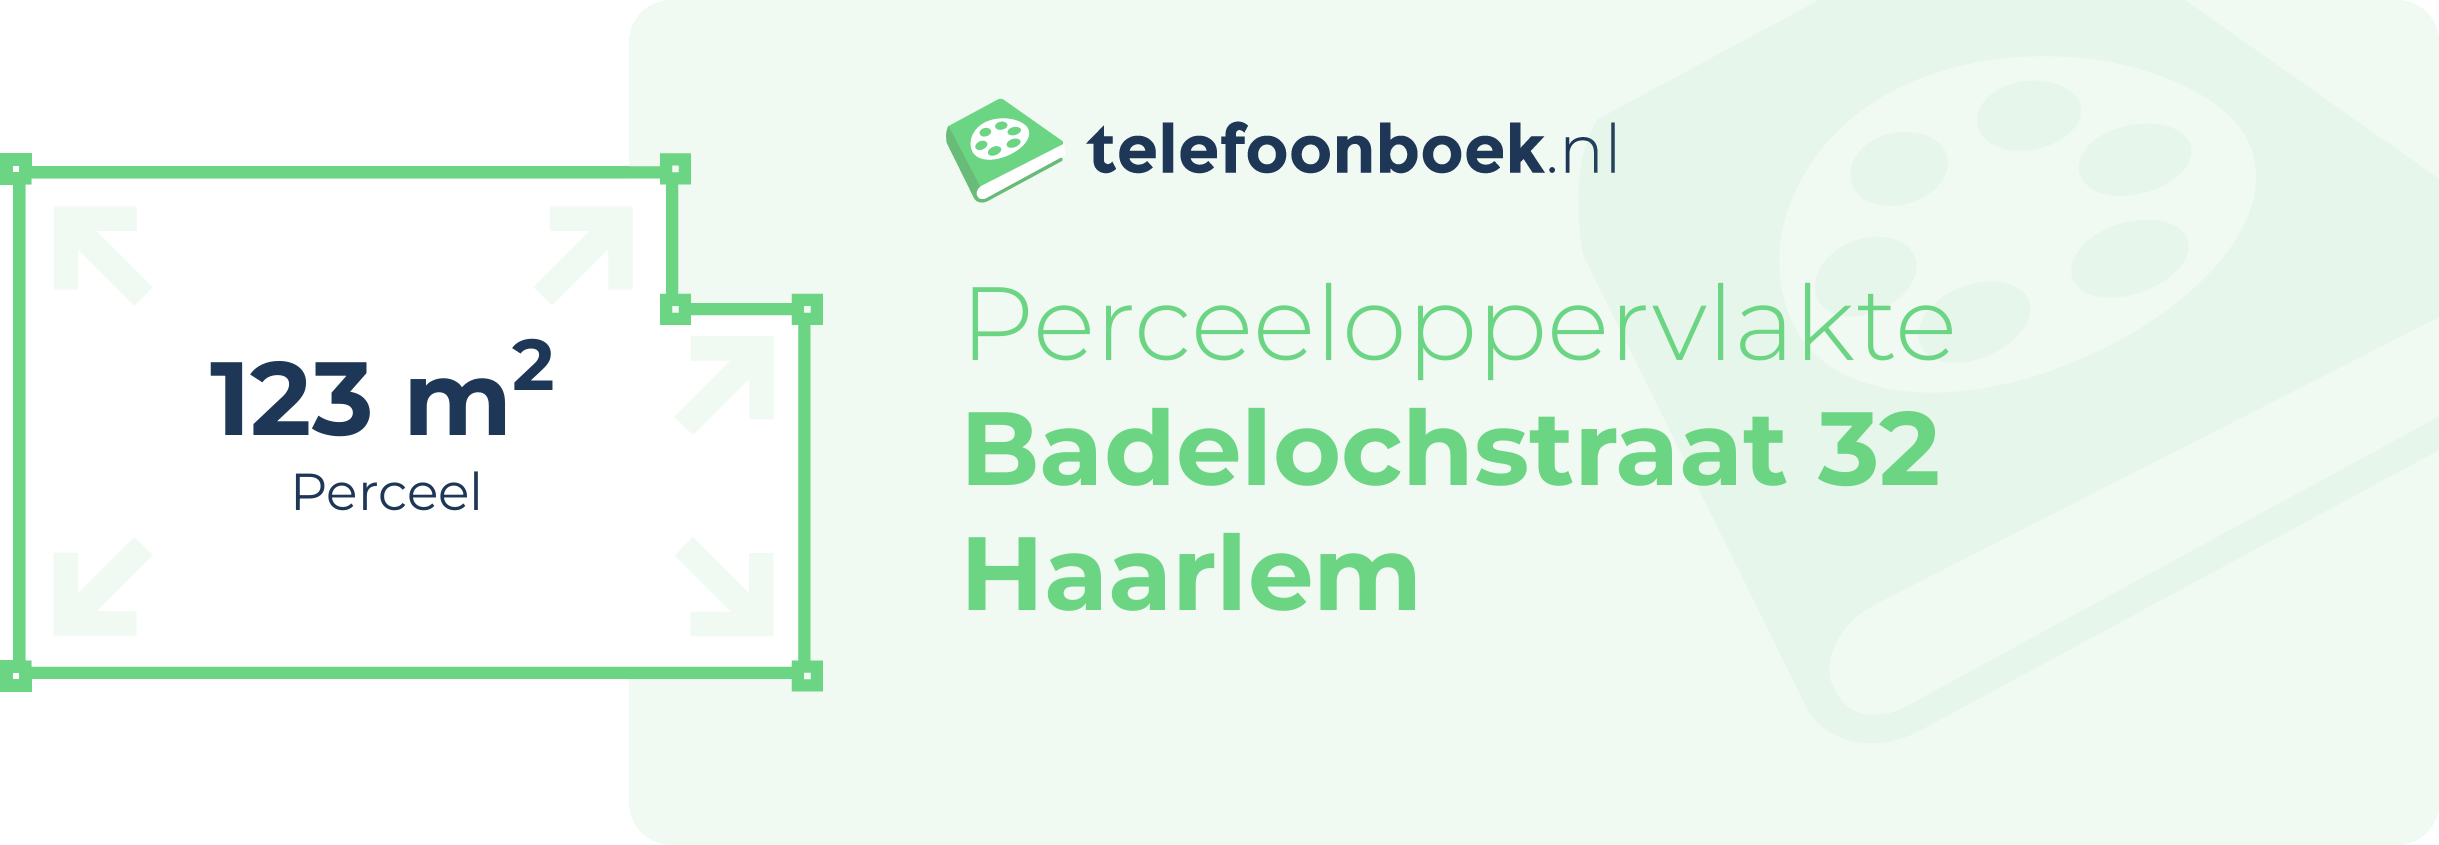 Perceeloppervlakte Badelochstraat 32 Haarlem